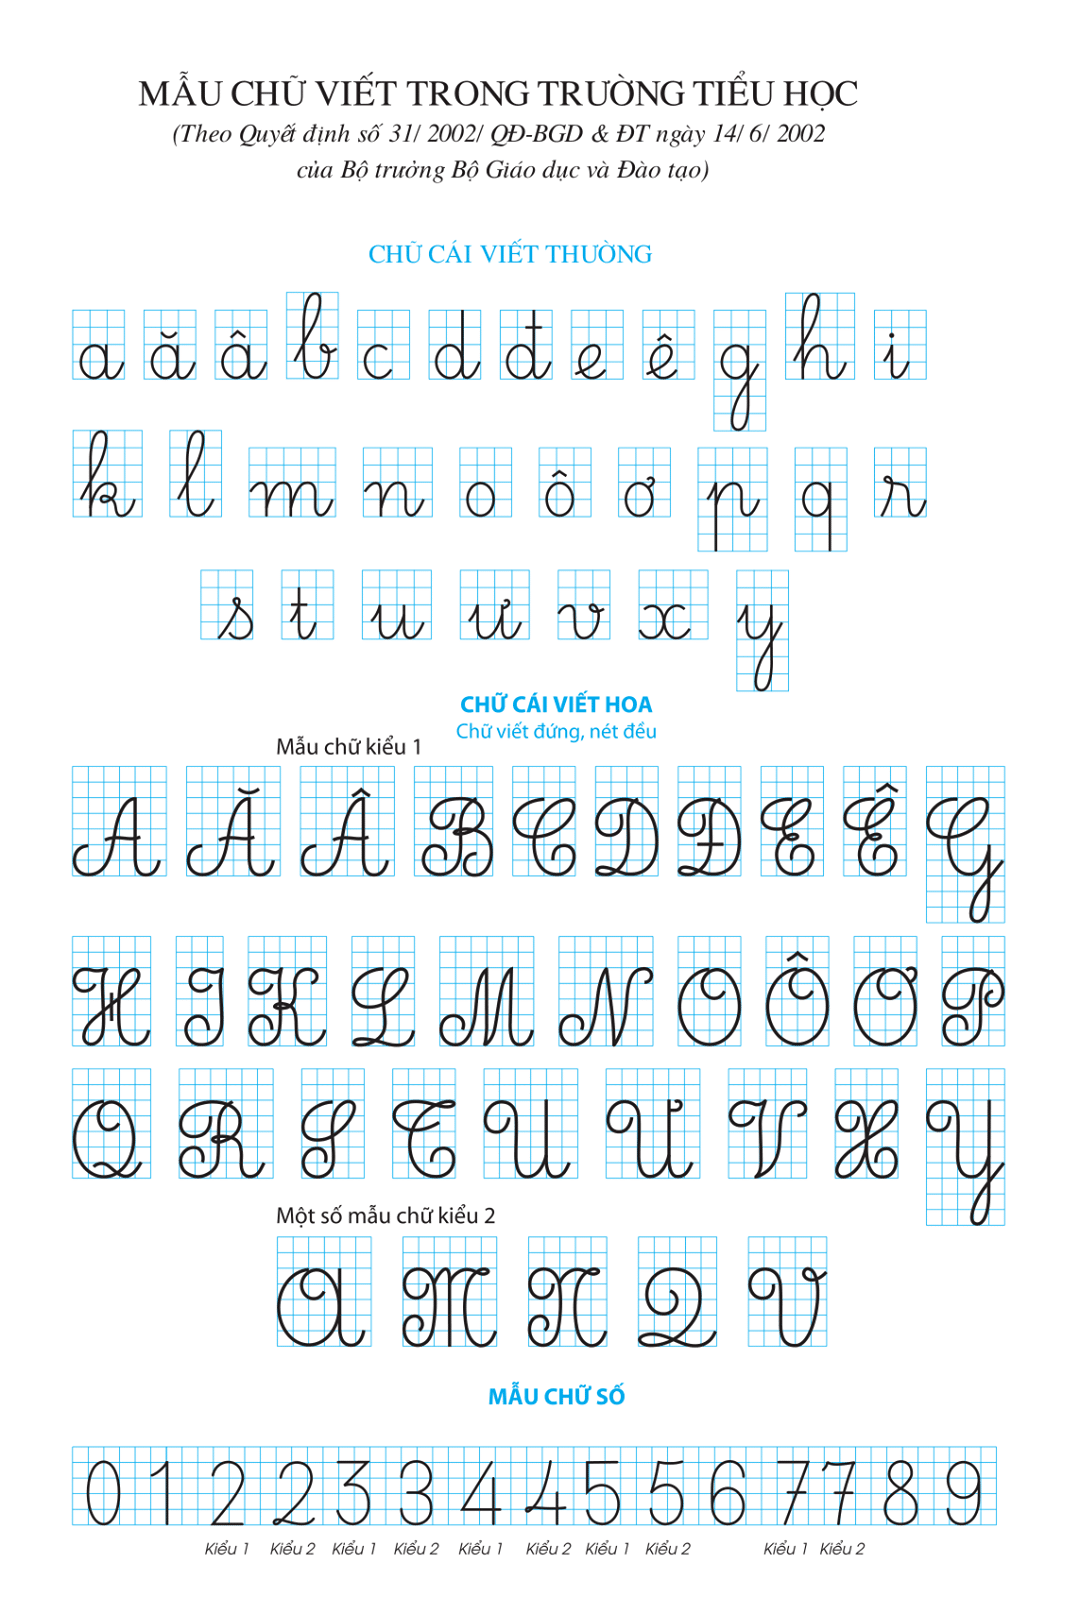 nb lettre alphabet